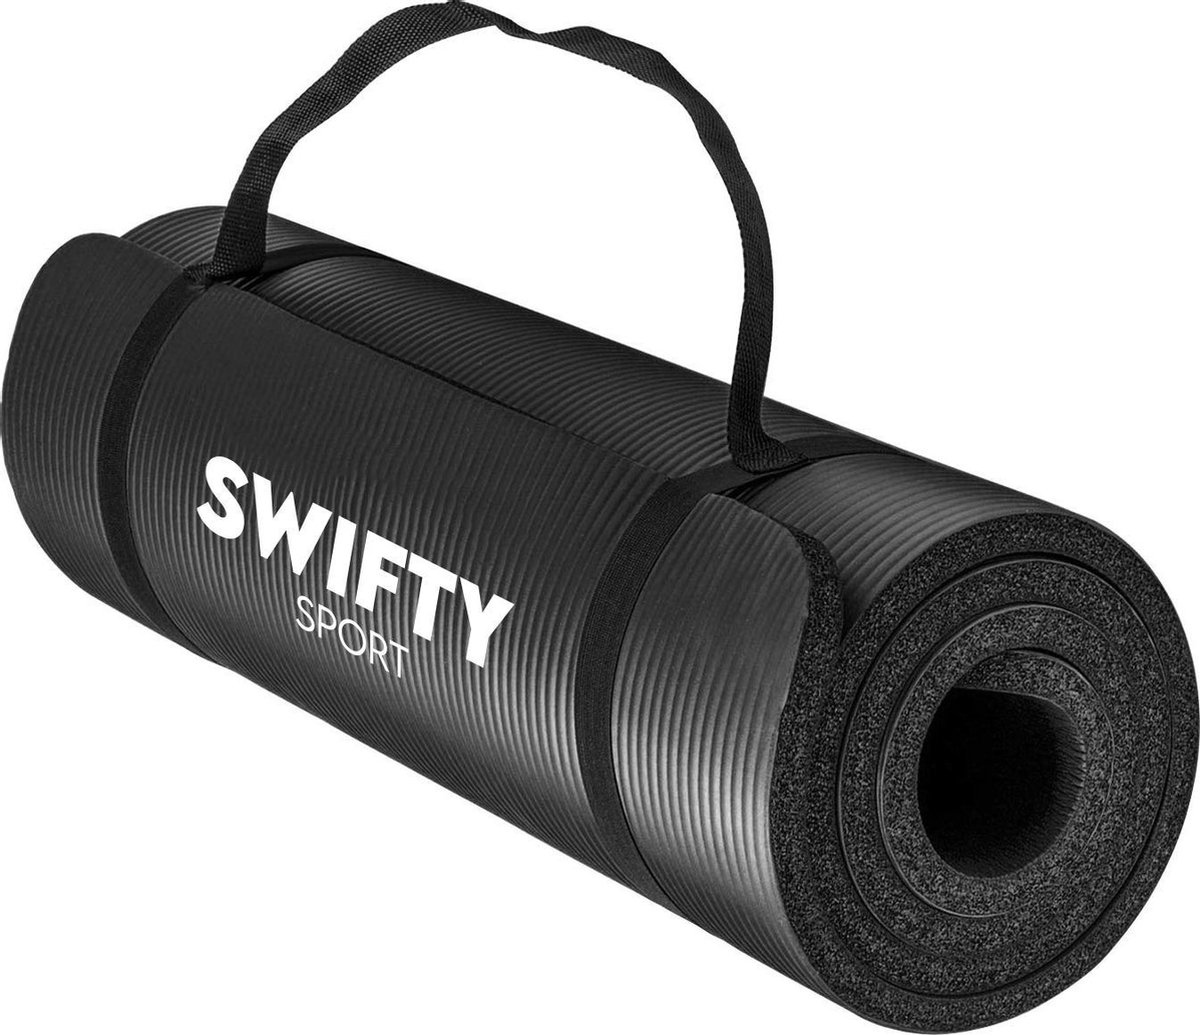 Swifty Sport Fitnessmat Inclusief draagtas en extra draagriem - 183 cm x 61 cm x 1,5 cm - anti slip - Zwart - Swifty